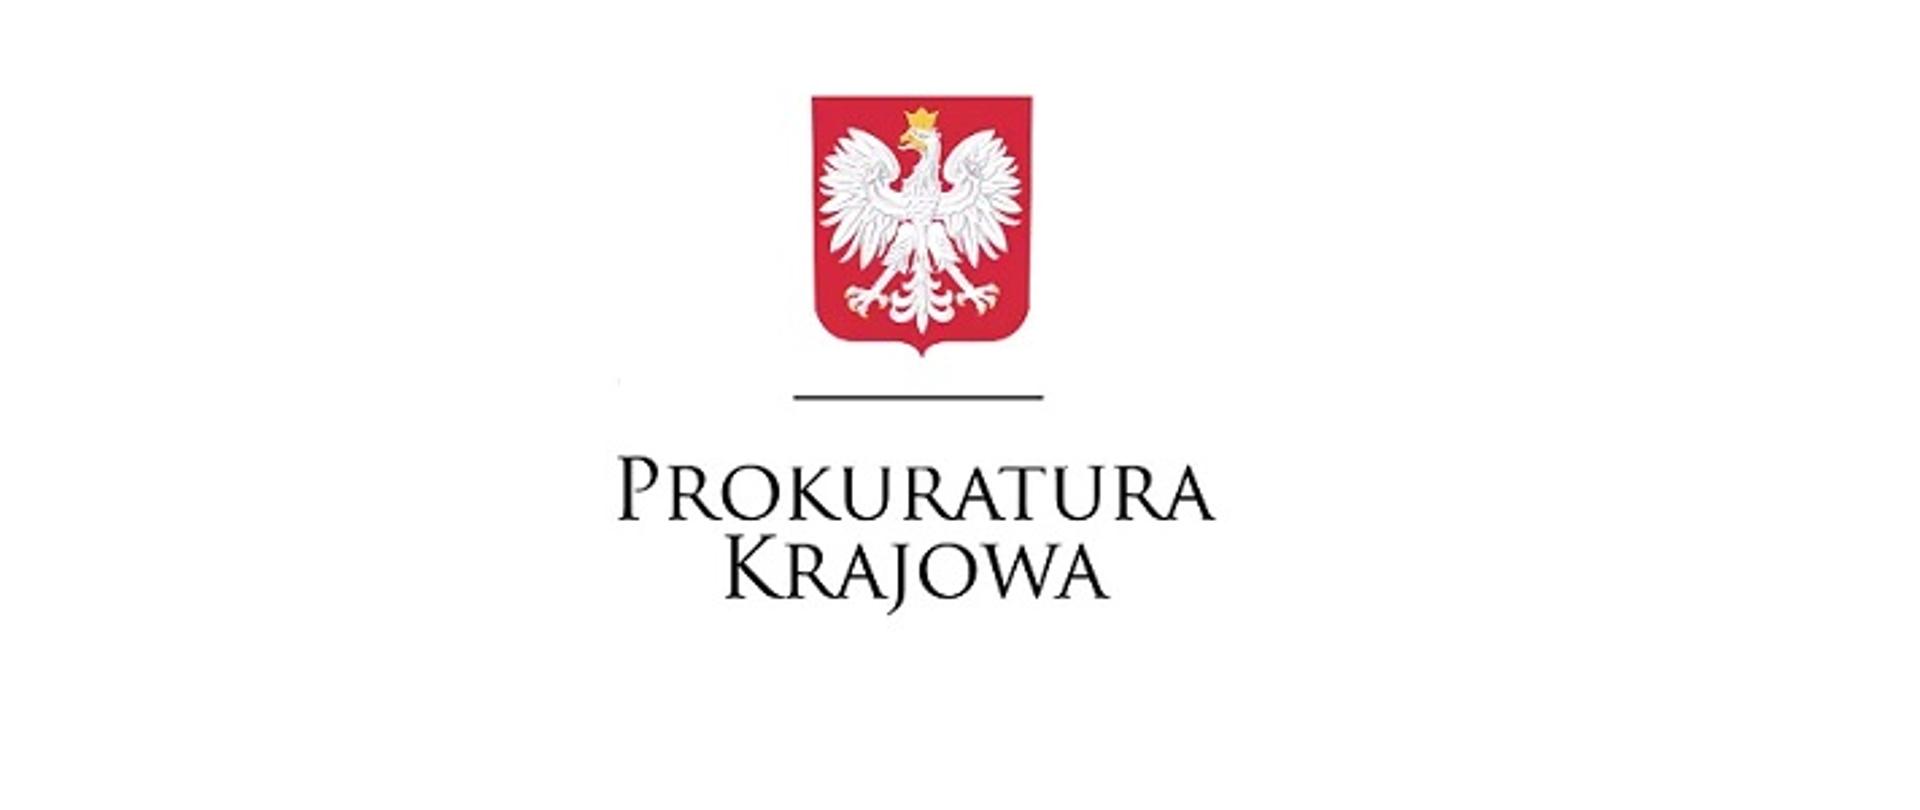 napis Prokuratura Krajowej oraz godło polski nad napisem